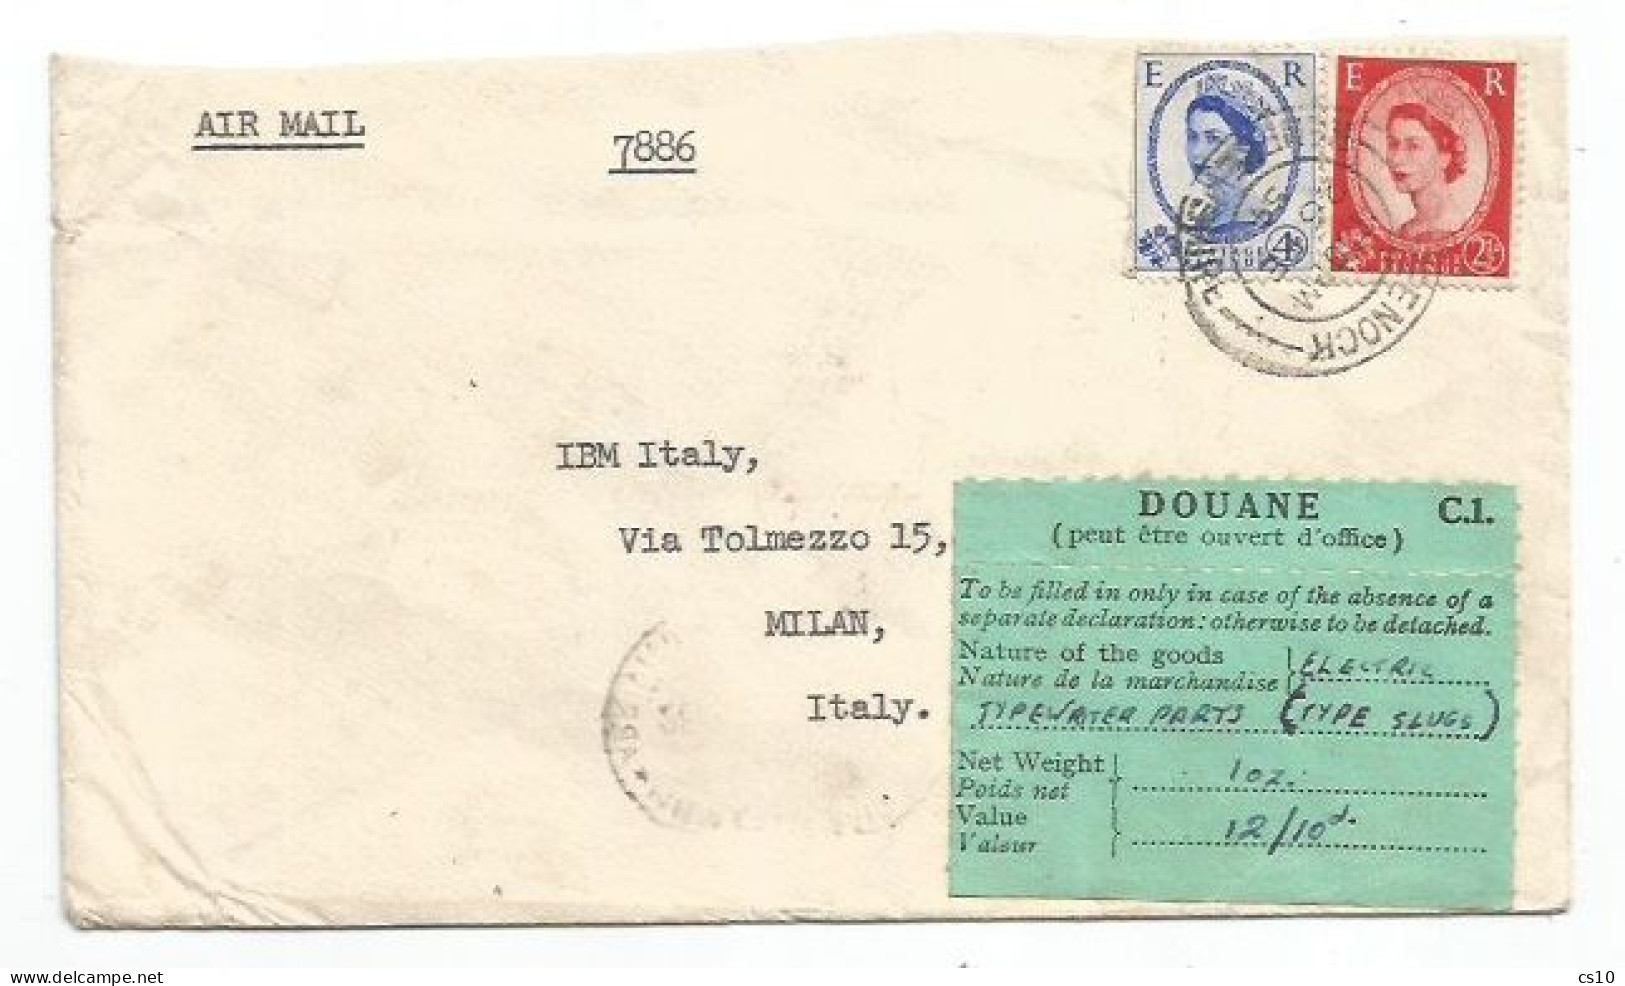 UK Britain Douane Customs Zoll Dogana Label C1 X Typewriter Parts Airmail CV UK 1954 To Italy C/o IBM Corporation - Marcofilie